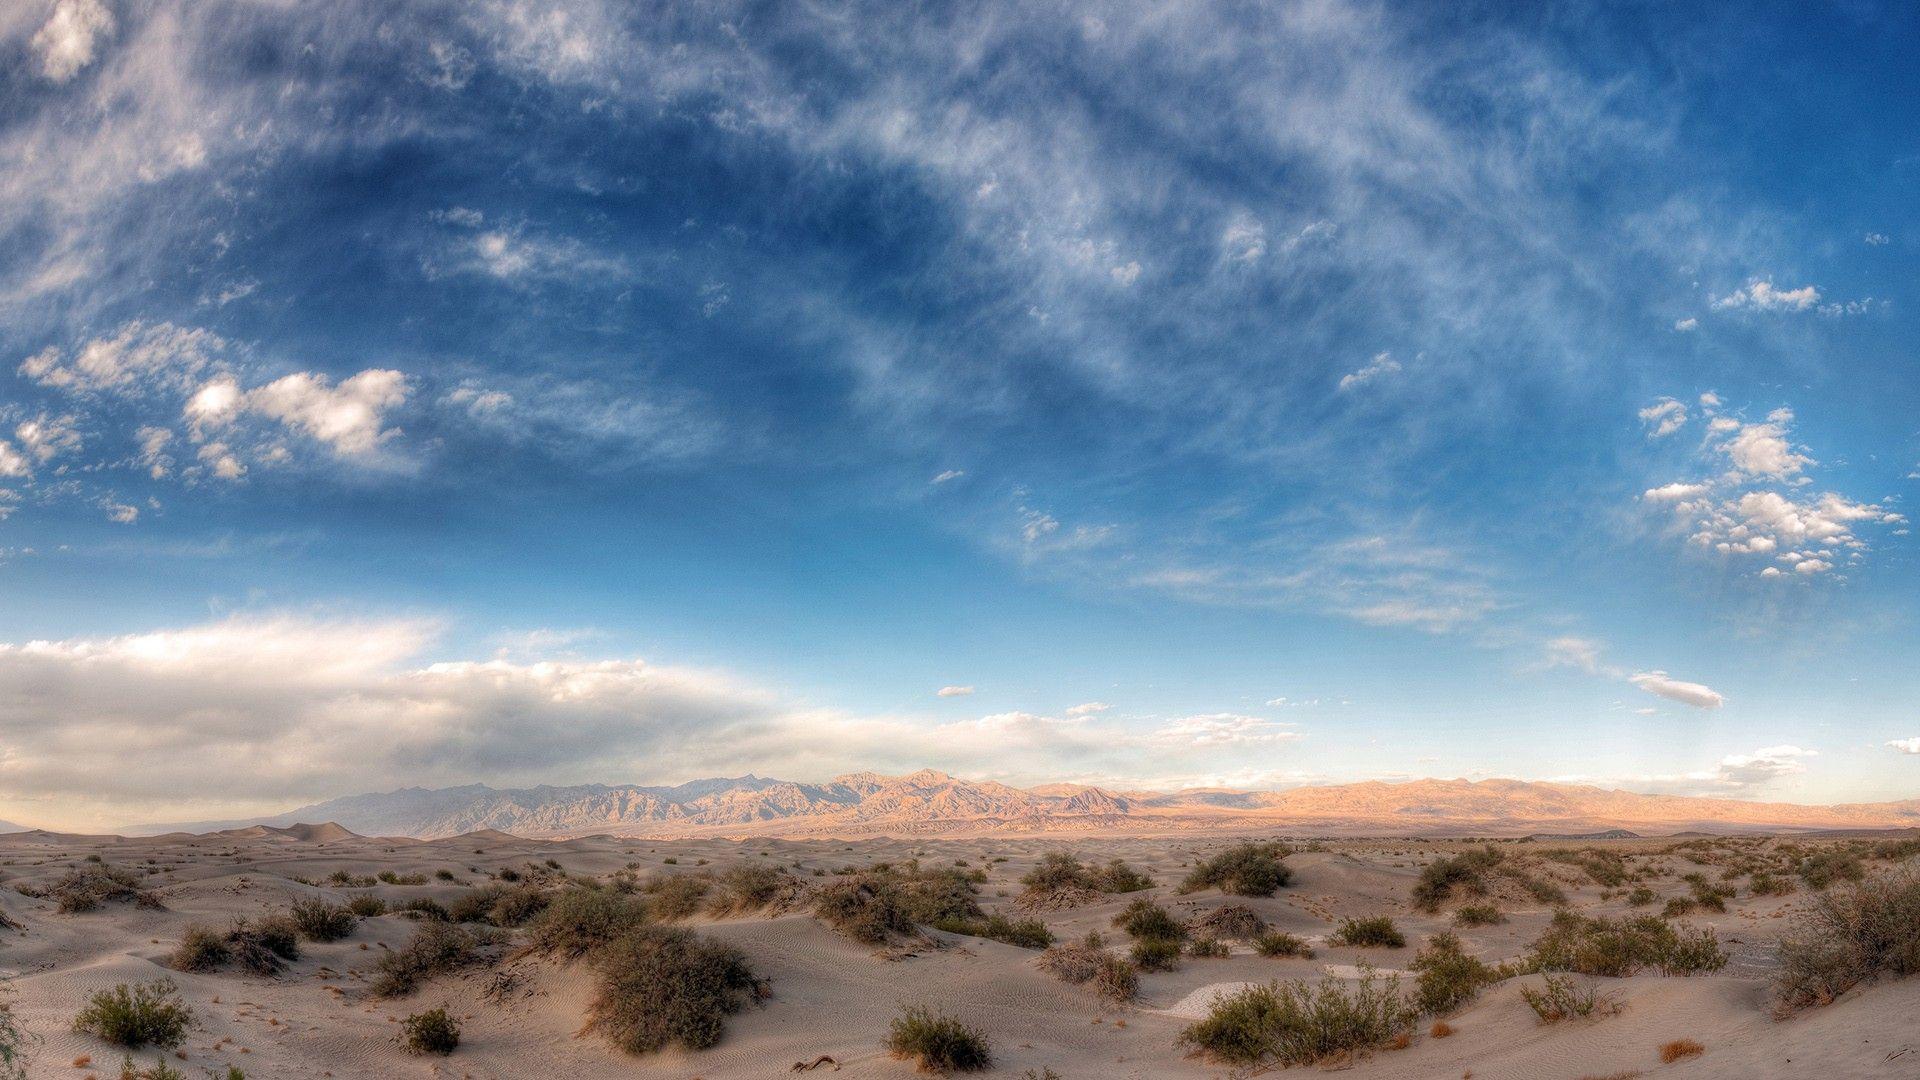 Desert #AtacamaDesert #Wallpaper. Nature Wallpaper